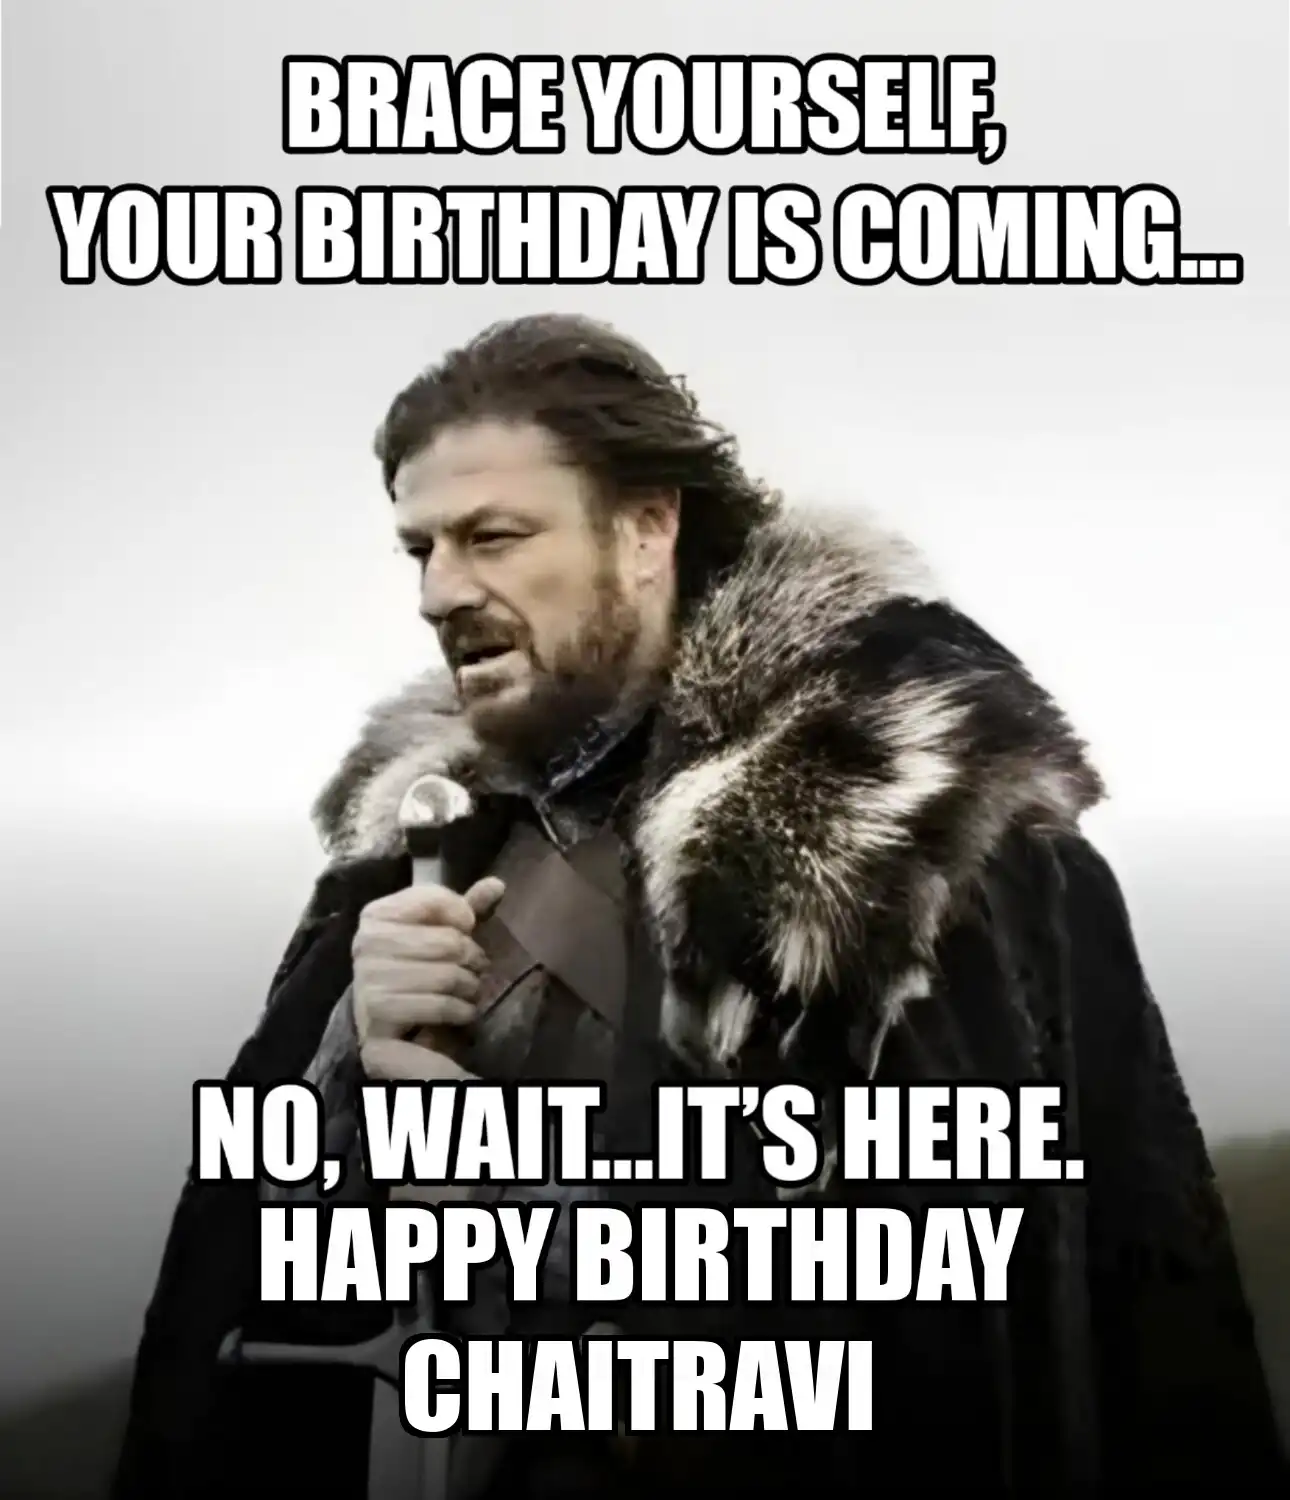 Happy Birthday Chaitravi Brace Yourself Your Birthday Is Coming Meme